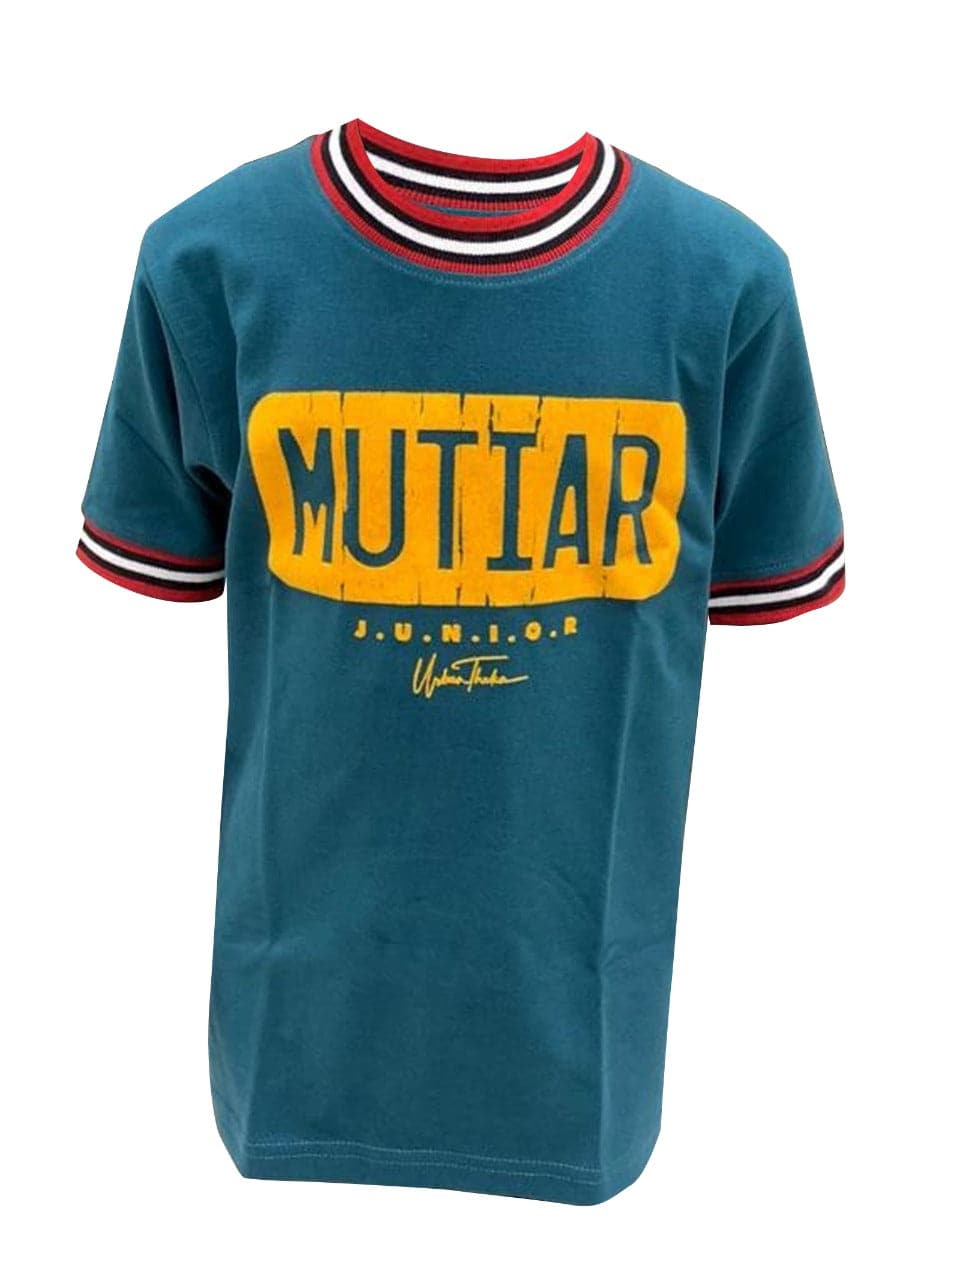 Mutiar Junior Teal Green T-shirt